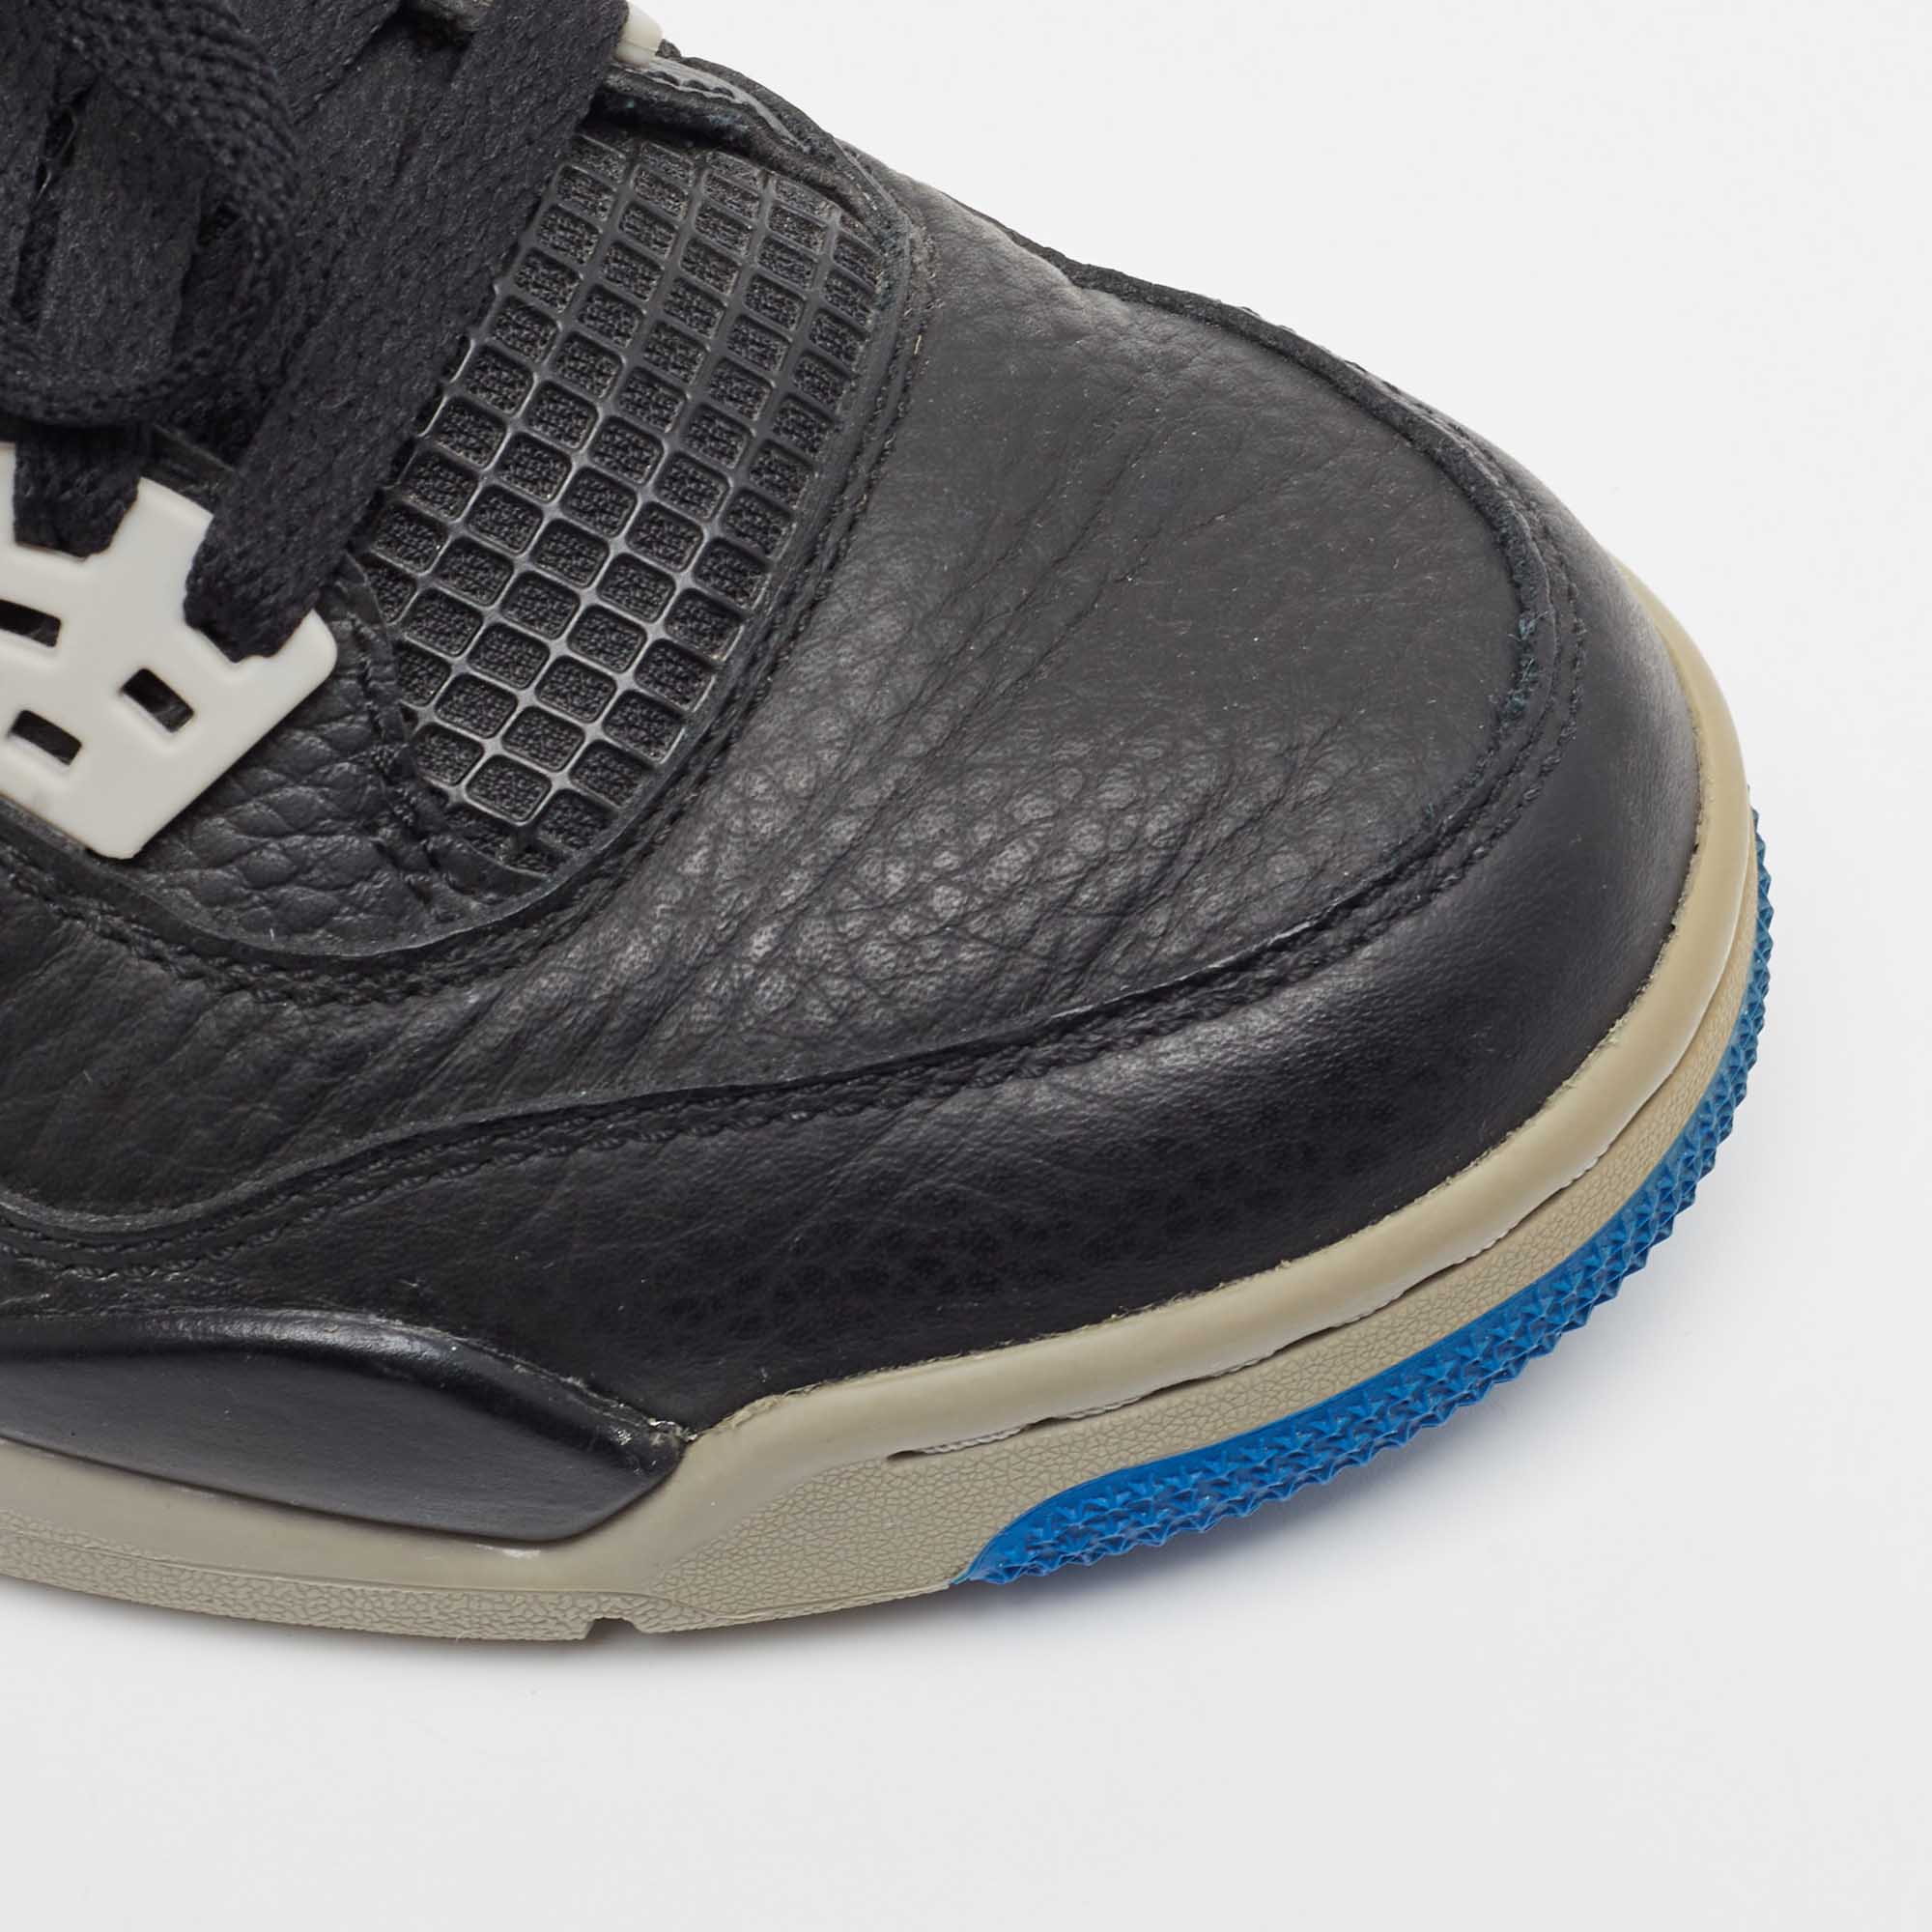 Air Jordans Black Leather Jordan 4 Retro BG Sneakers Size 38.5